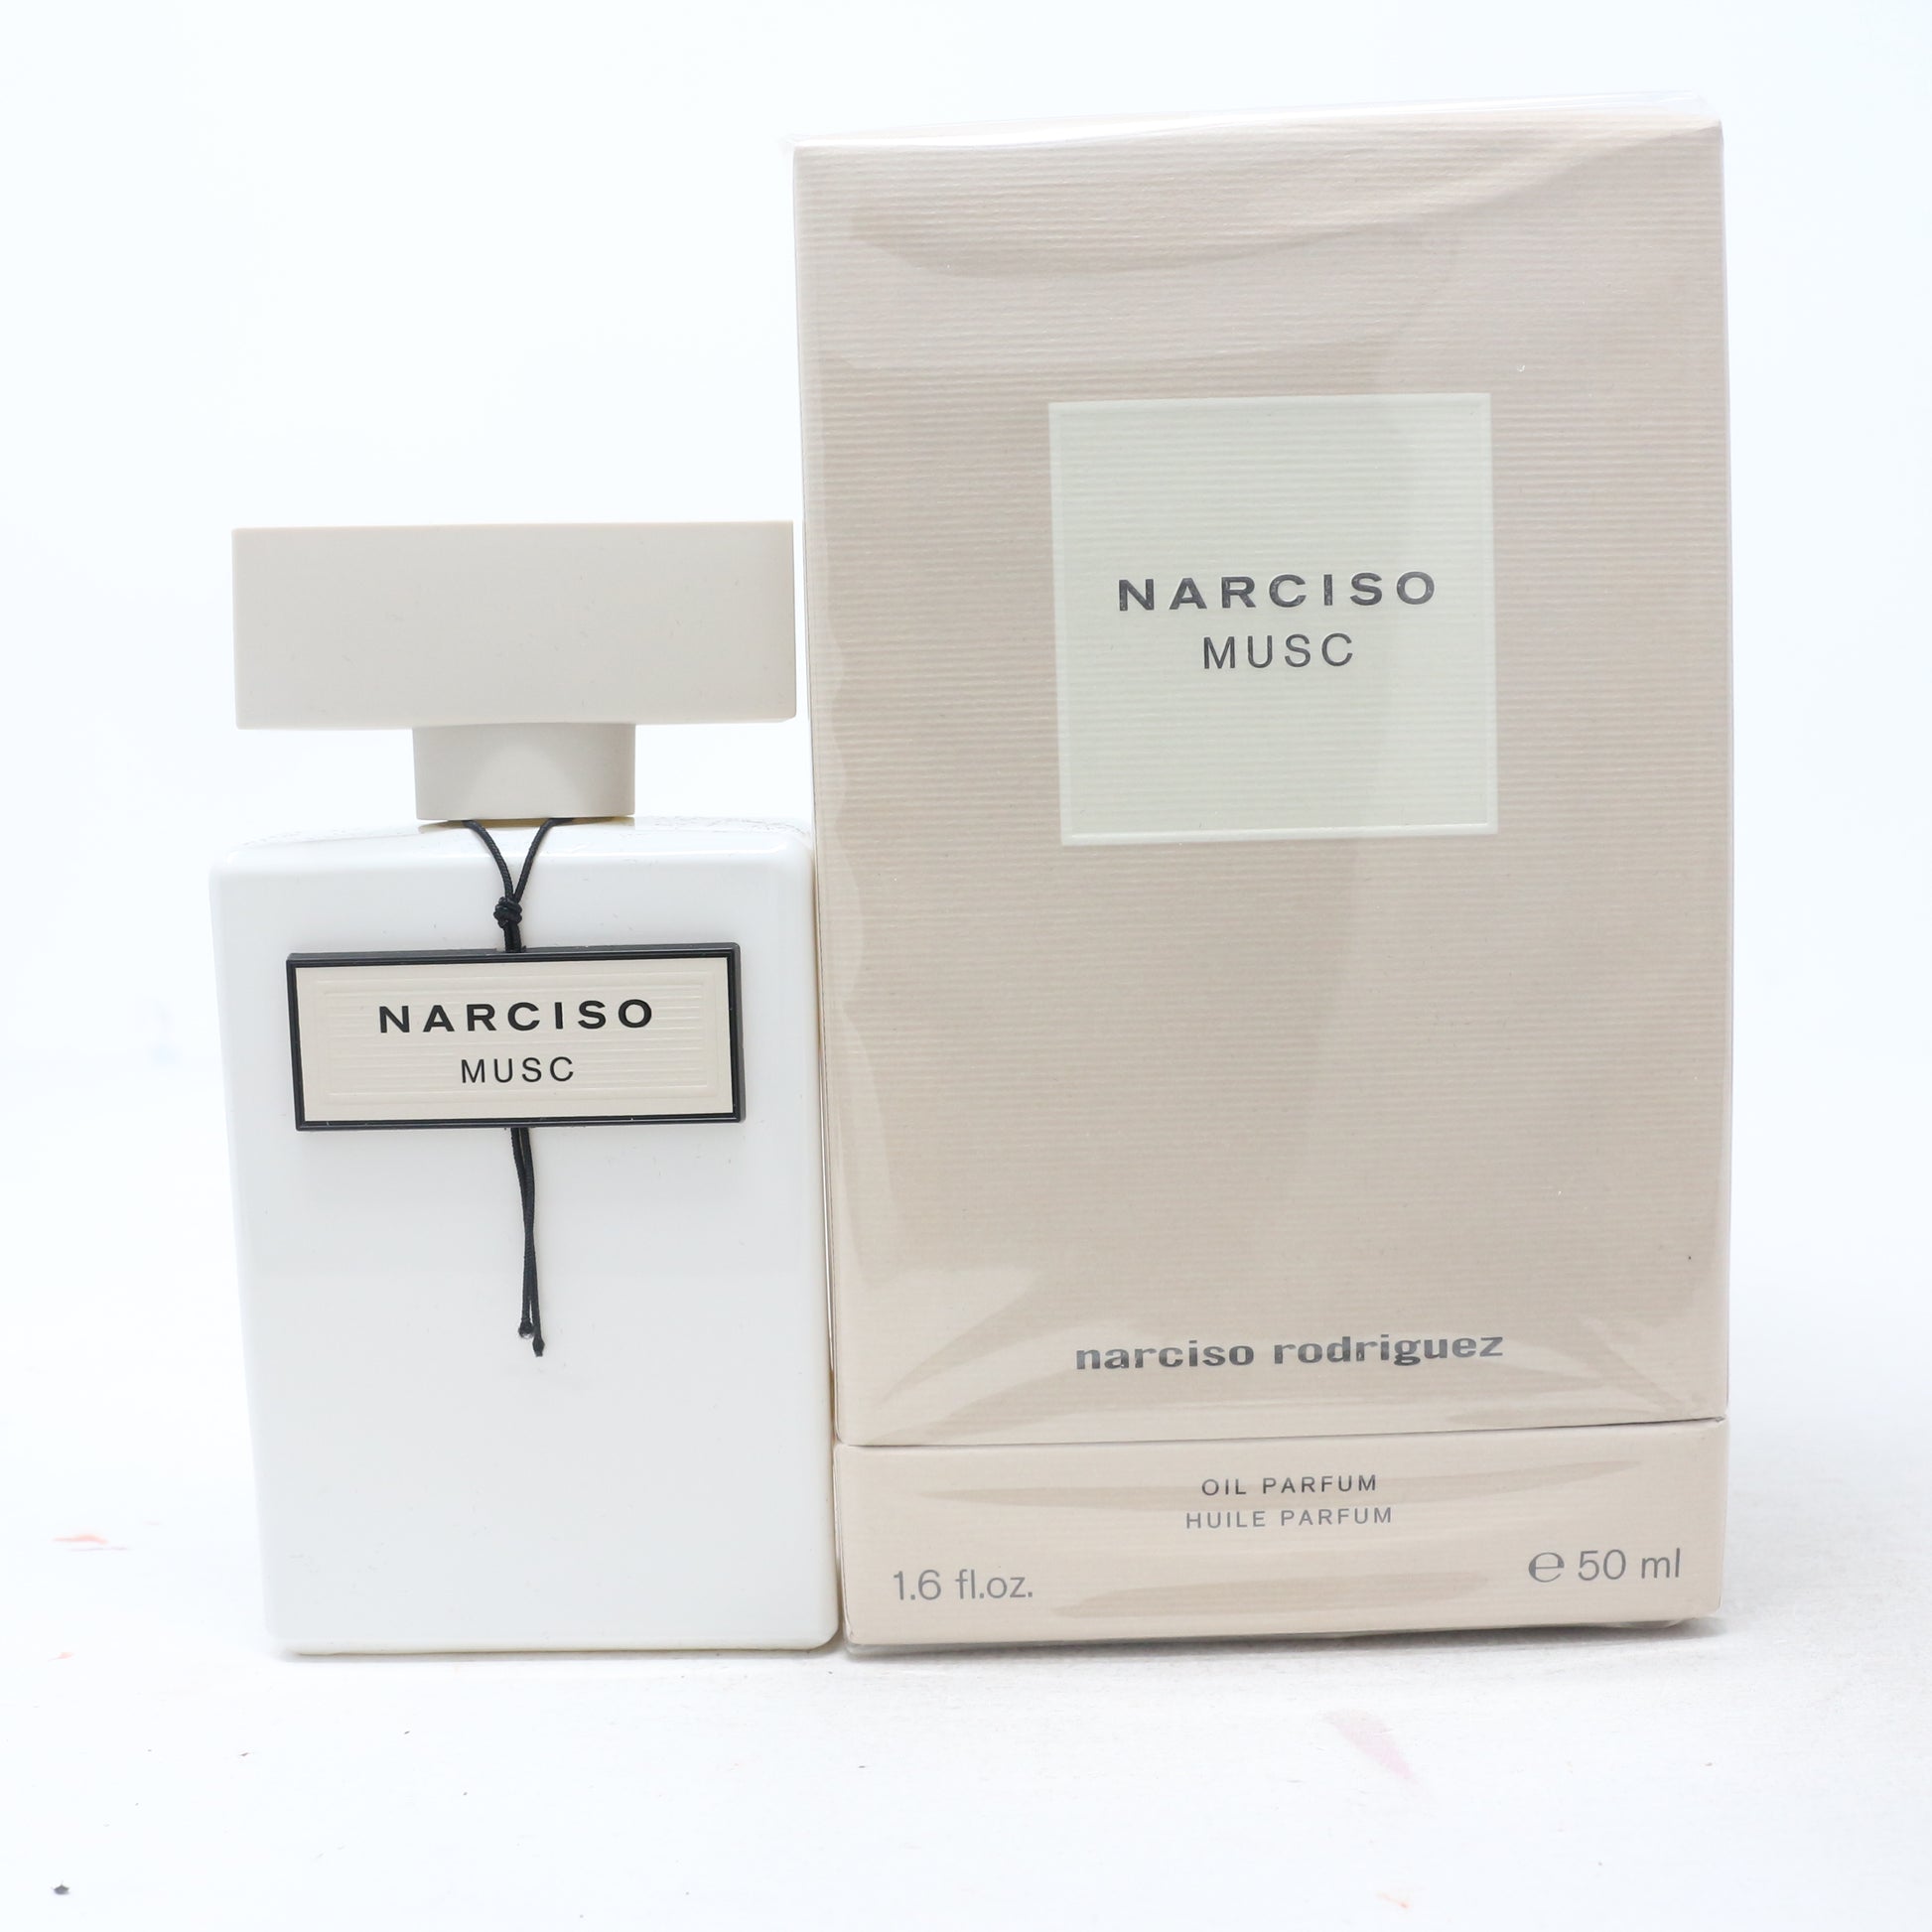 Narciso Musc Oil Parfum 50 ml